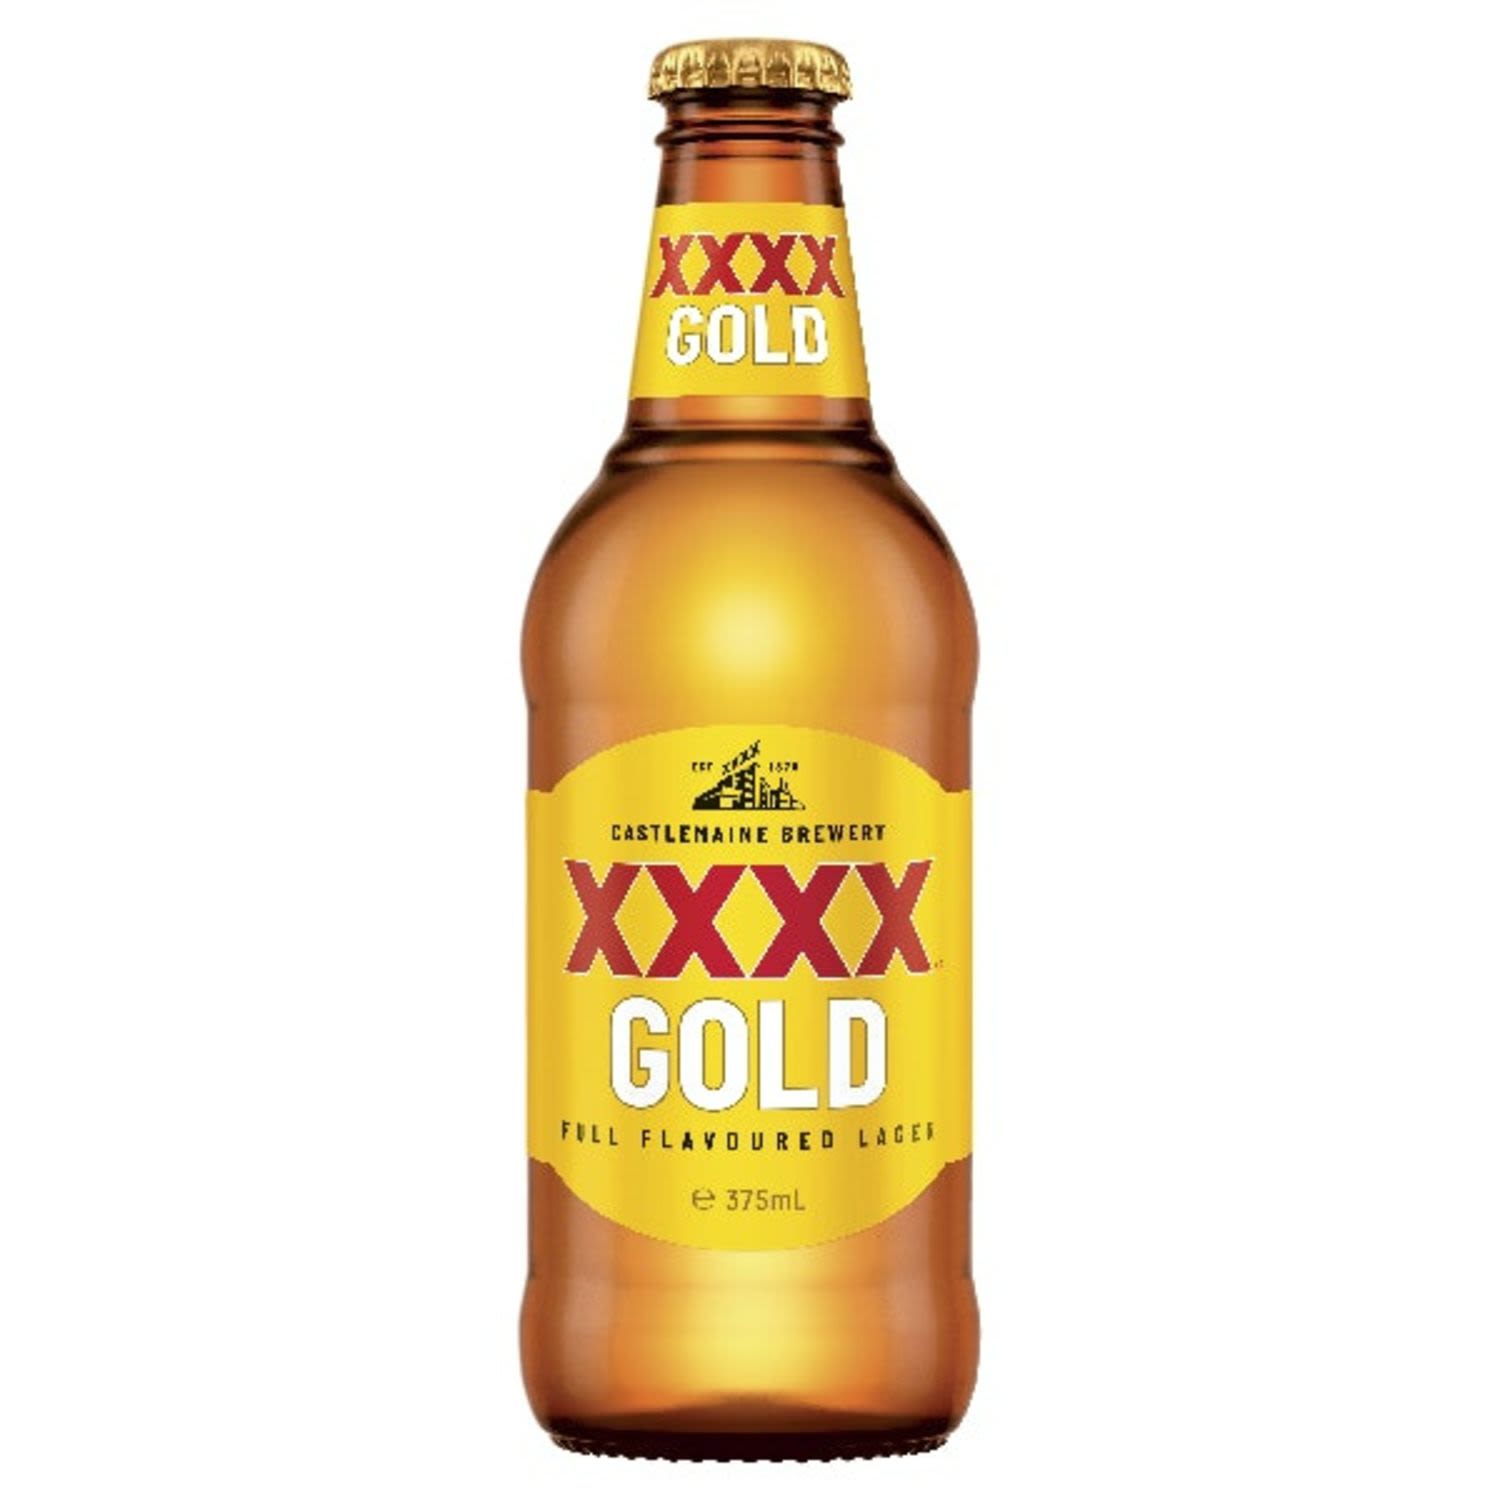 Forex gold beer hop notizie forex in italiano